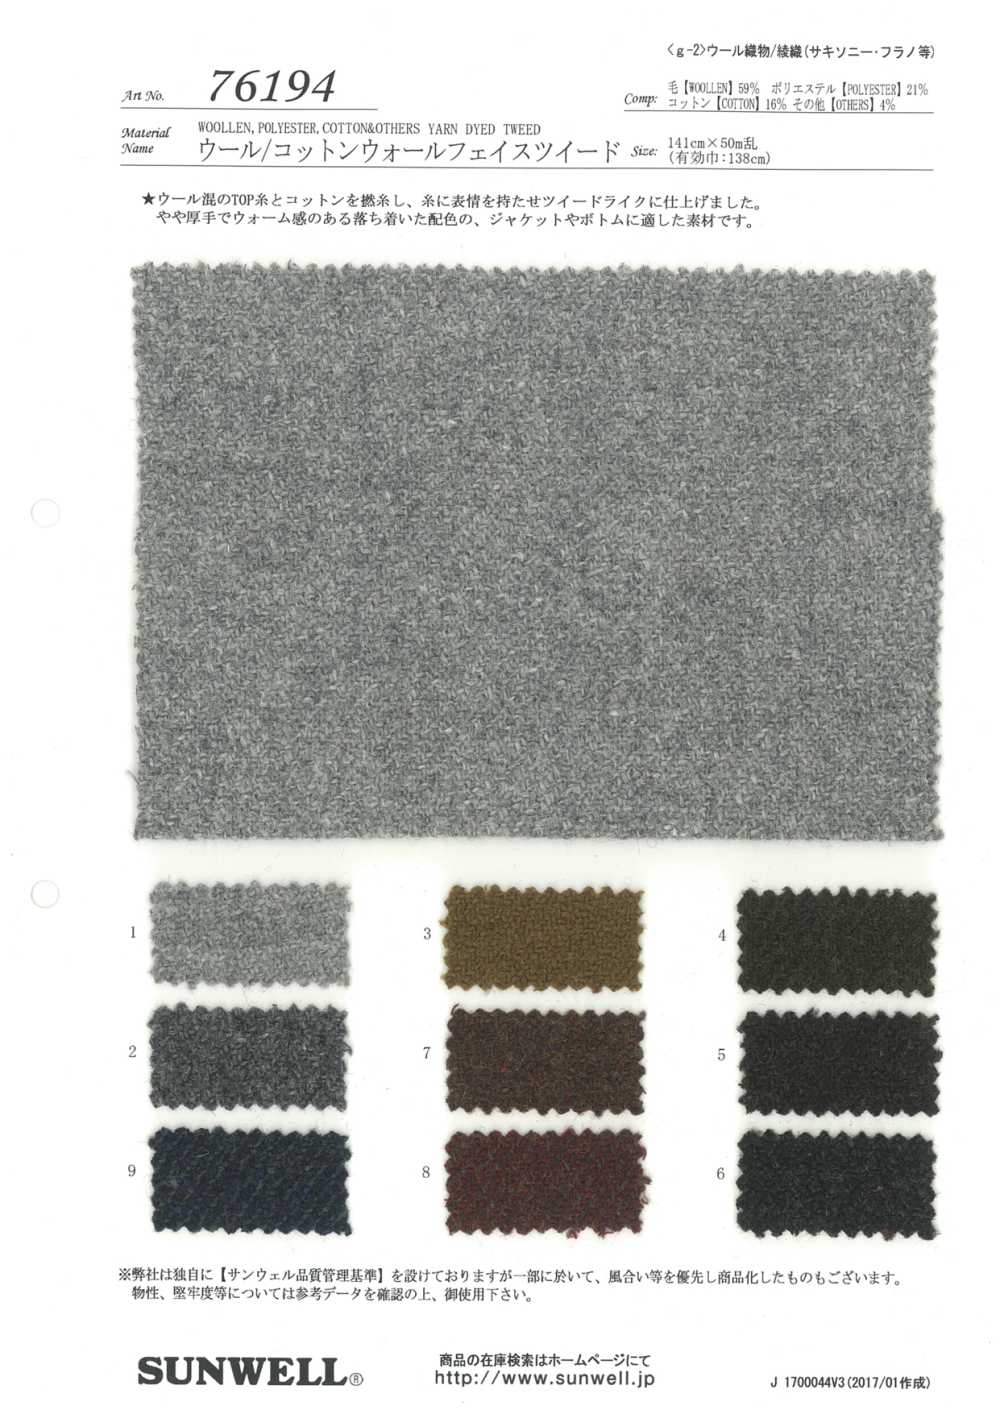 76194 [OUTLET] Wandgesichts-Tweed Aus Wolle/Baumwolle[Textilgewebe] SUNWELL